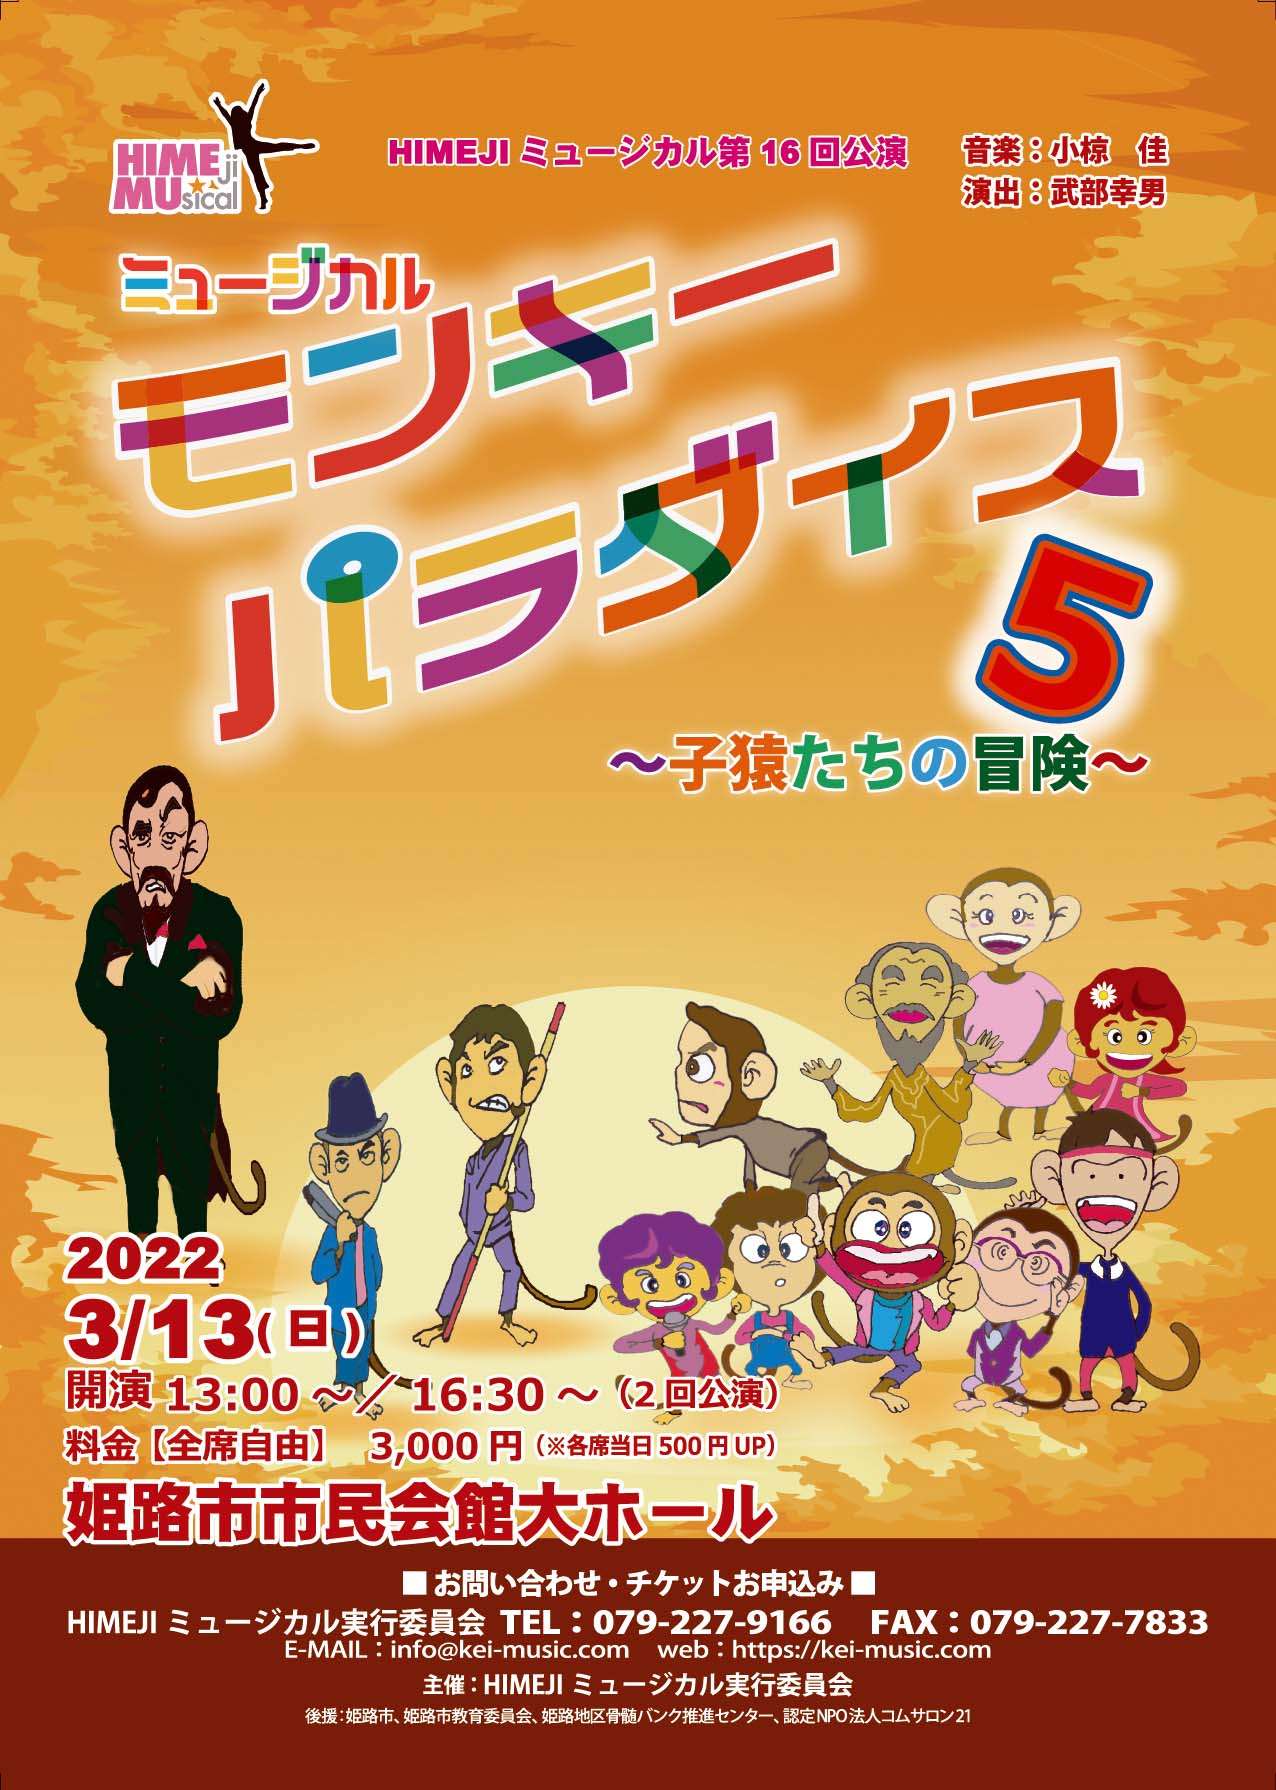 【2022.2.27】HIMEJIミュージカル第16回公演「モンキーパラダイス５～子猿たちの冒険～